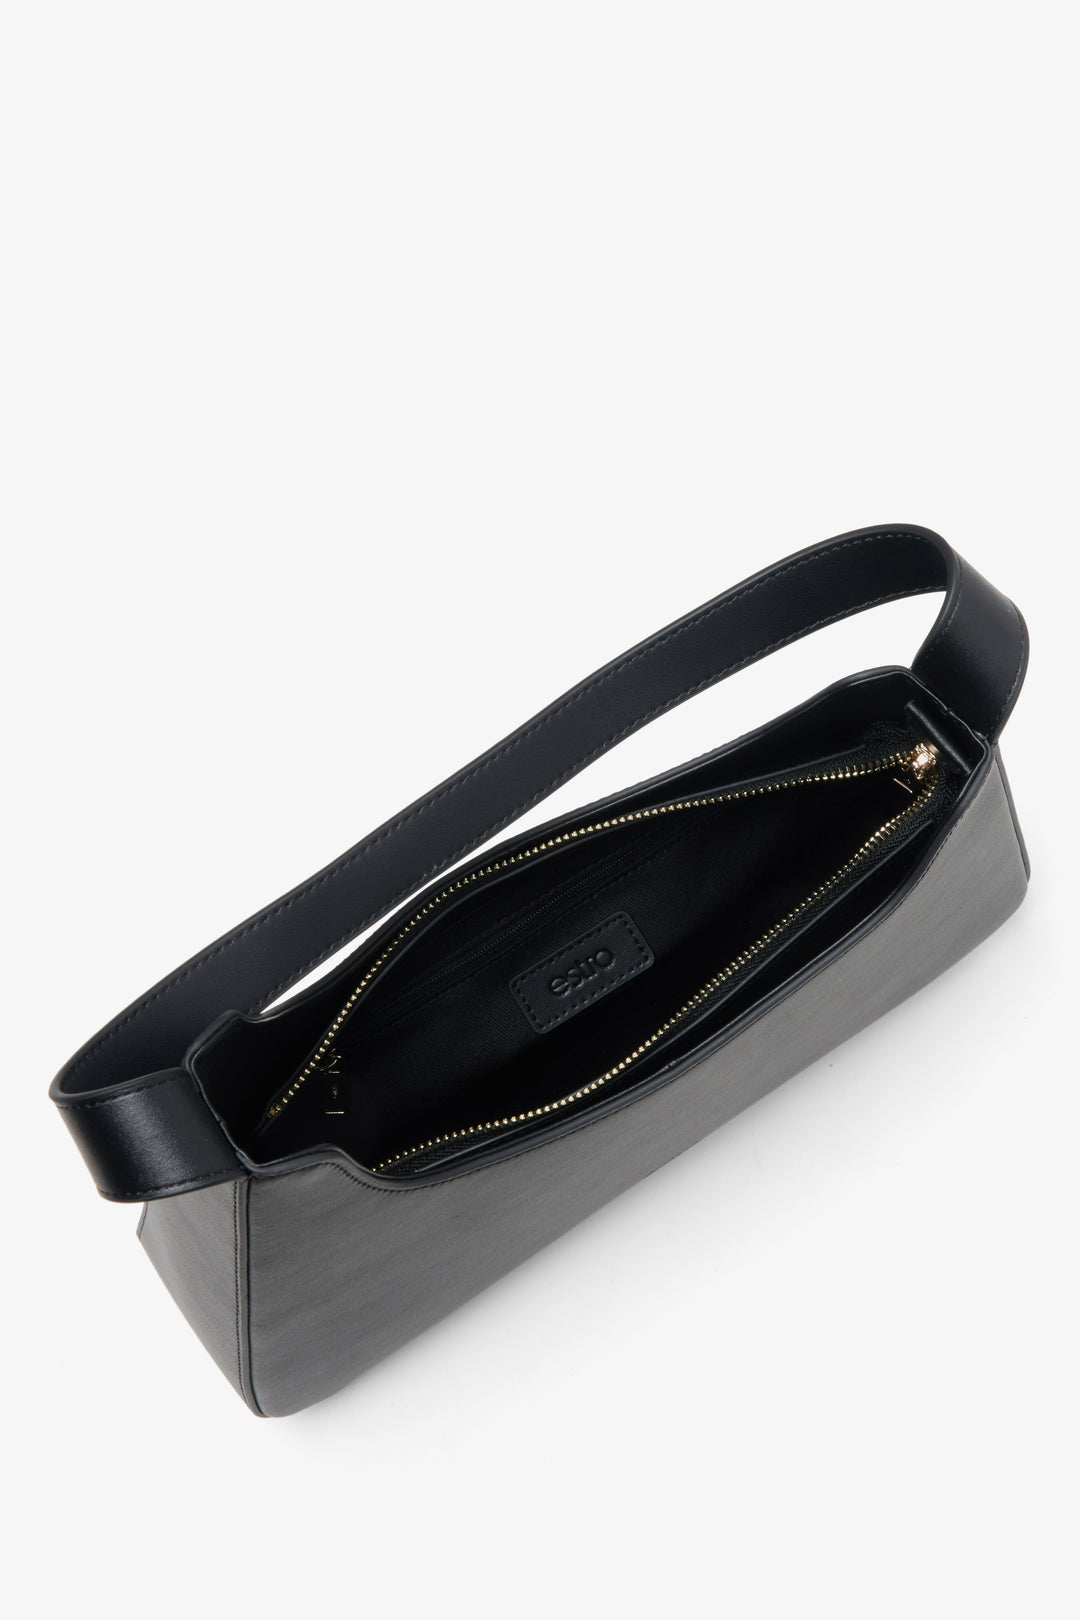 Black leather handbag Estro - a close-up on bag's compartment.